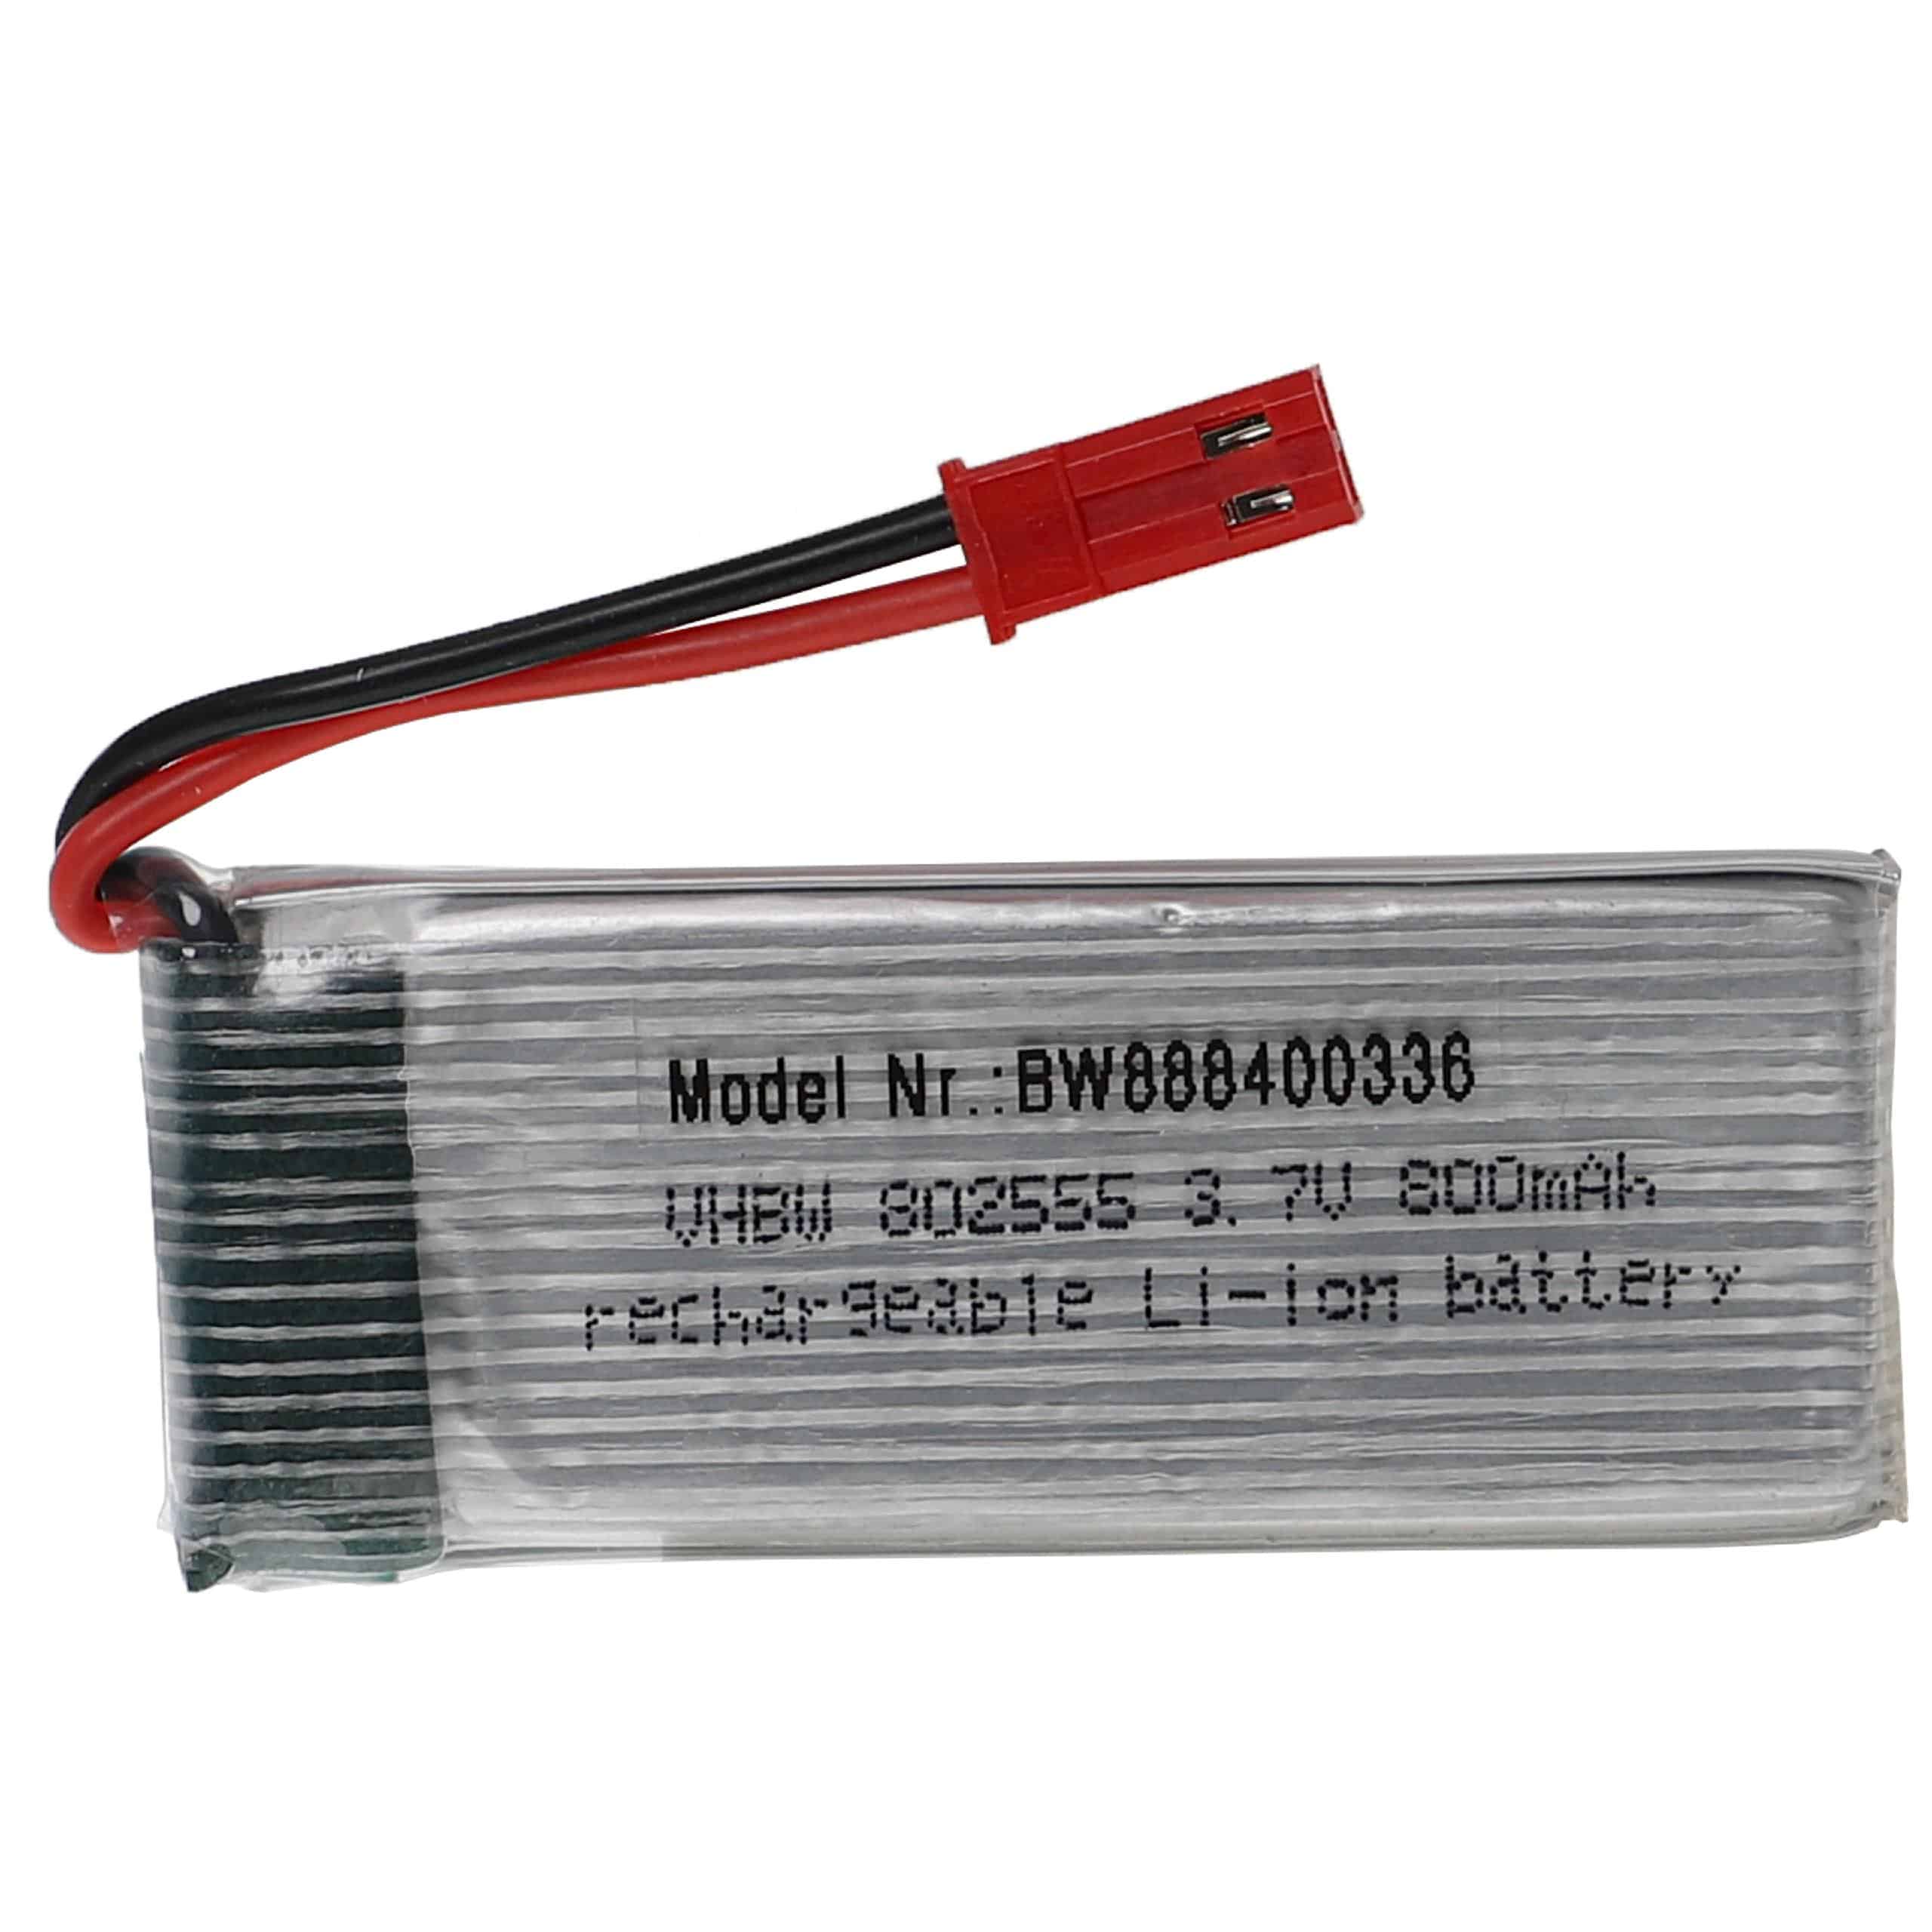 Akumulator do modeli zdalnie sterowanych RC - 800 mAh 3,7 V LiPo, BEC